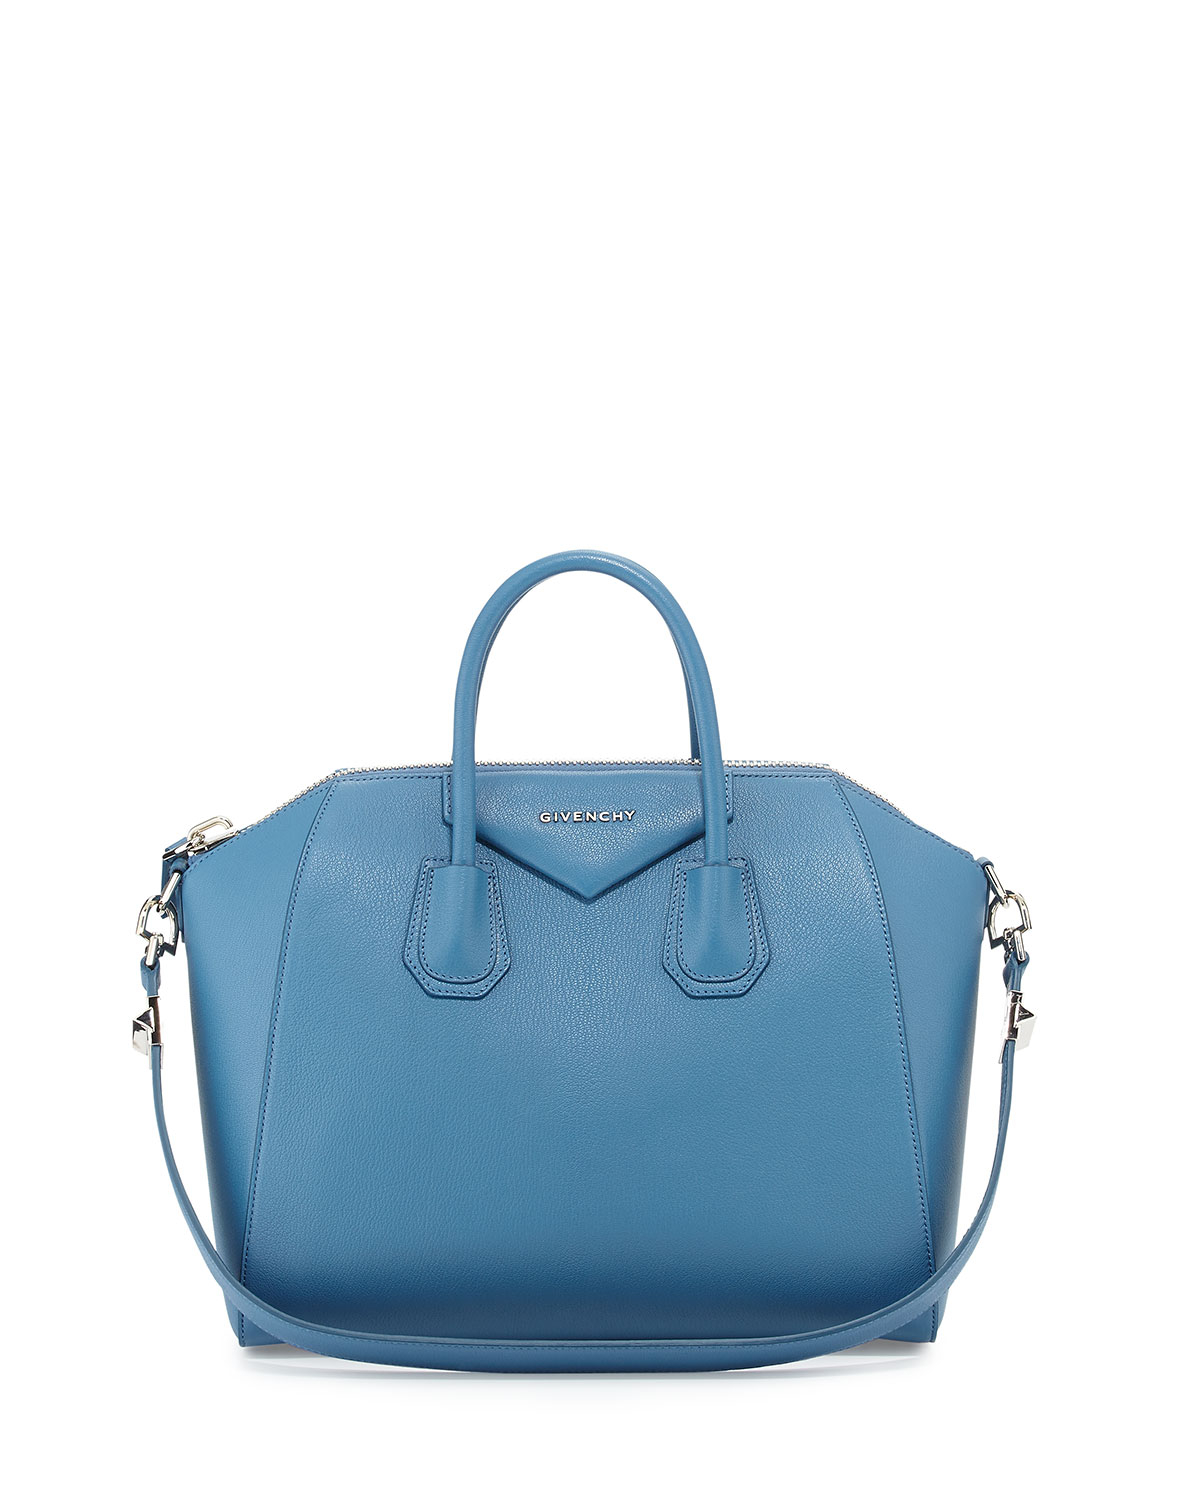 Givenchy Antigona Mini Leather Shoulder Bag in Blue | Lyst